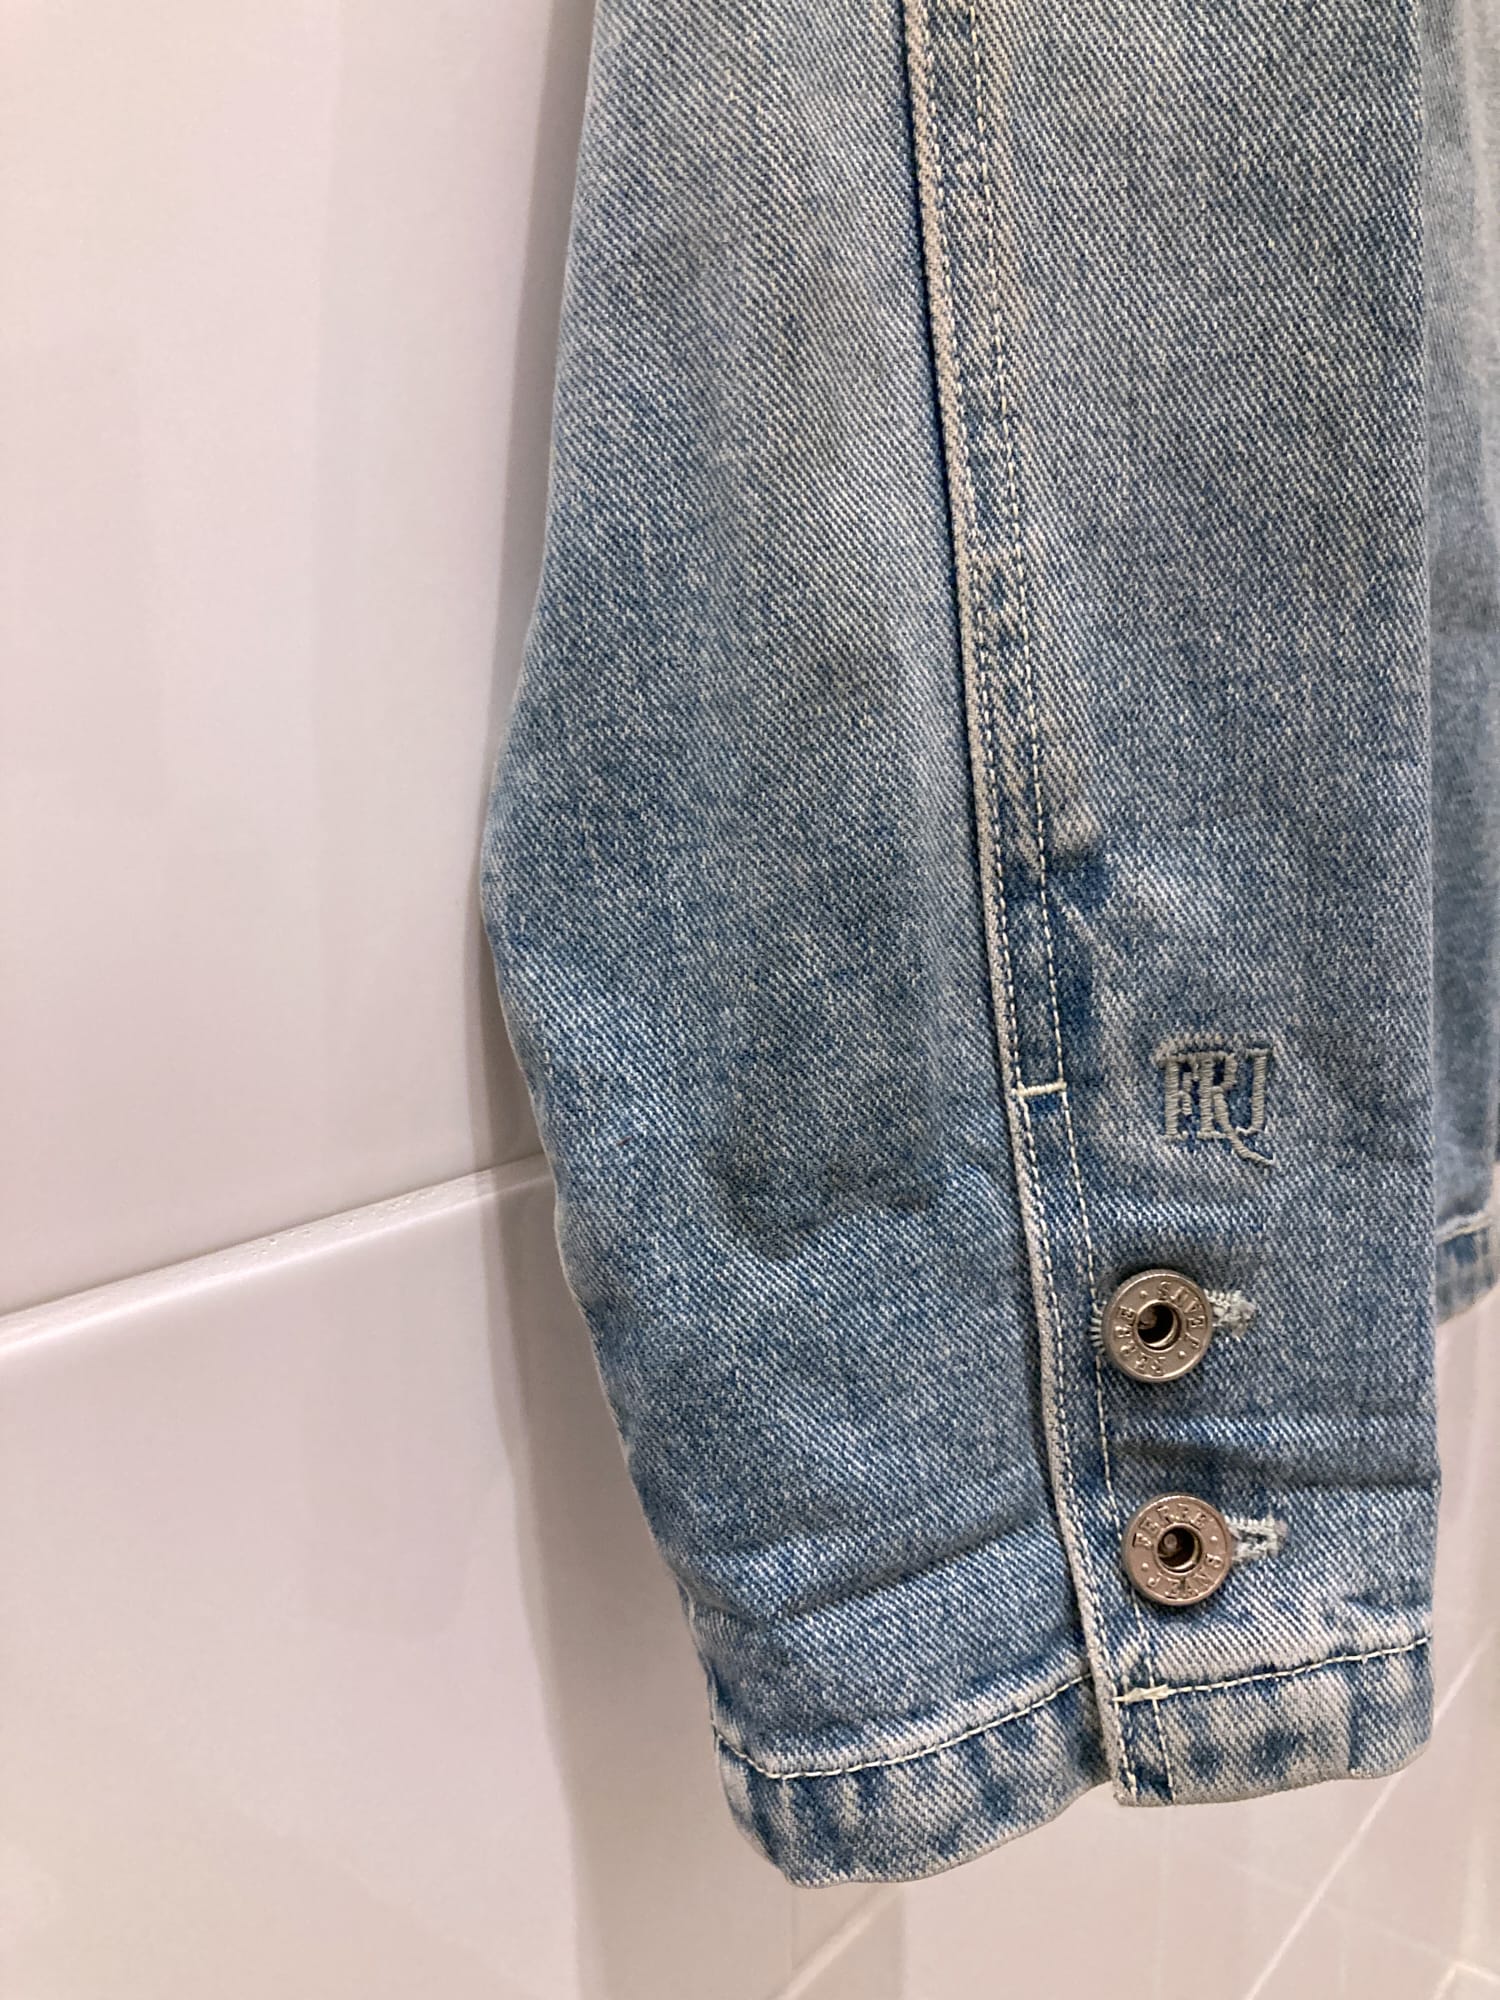 Gianfranco Ferre Jeans 1990s faded washed blue panelled denim jacket